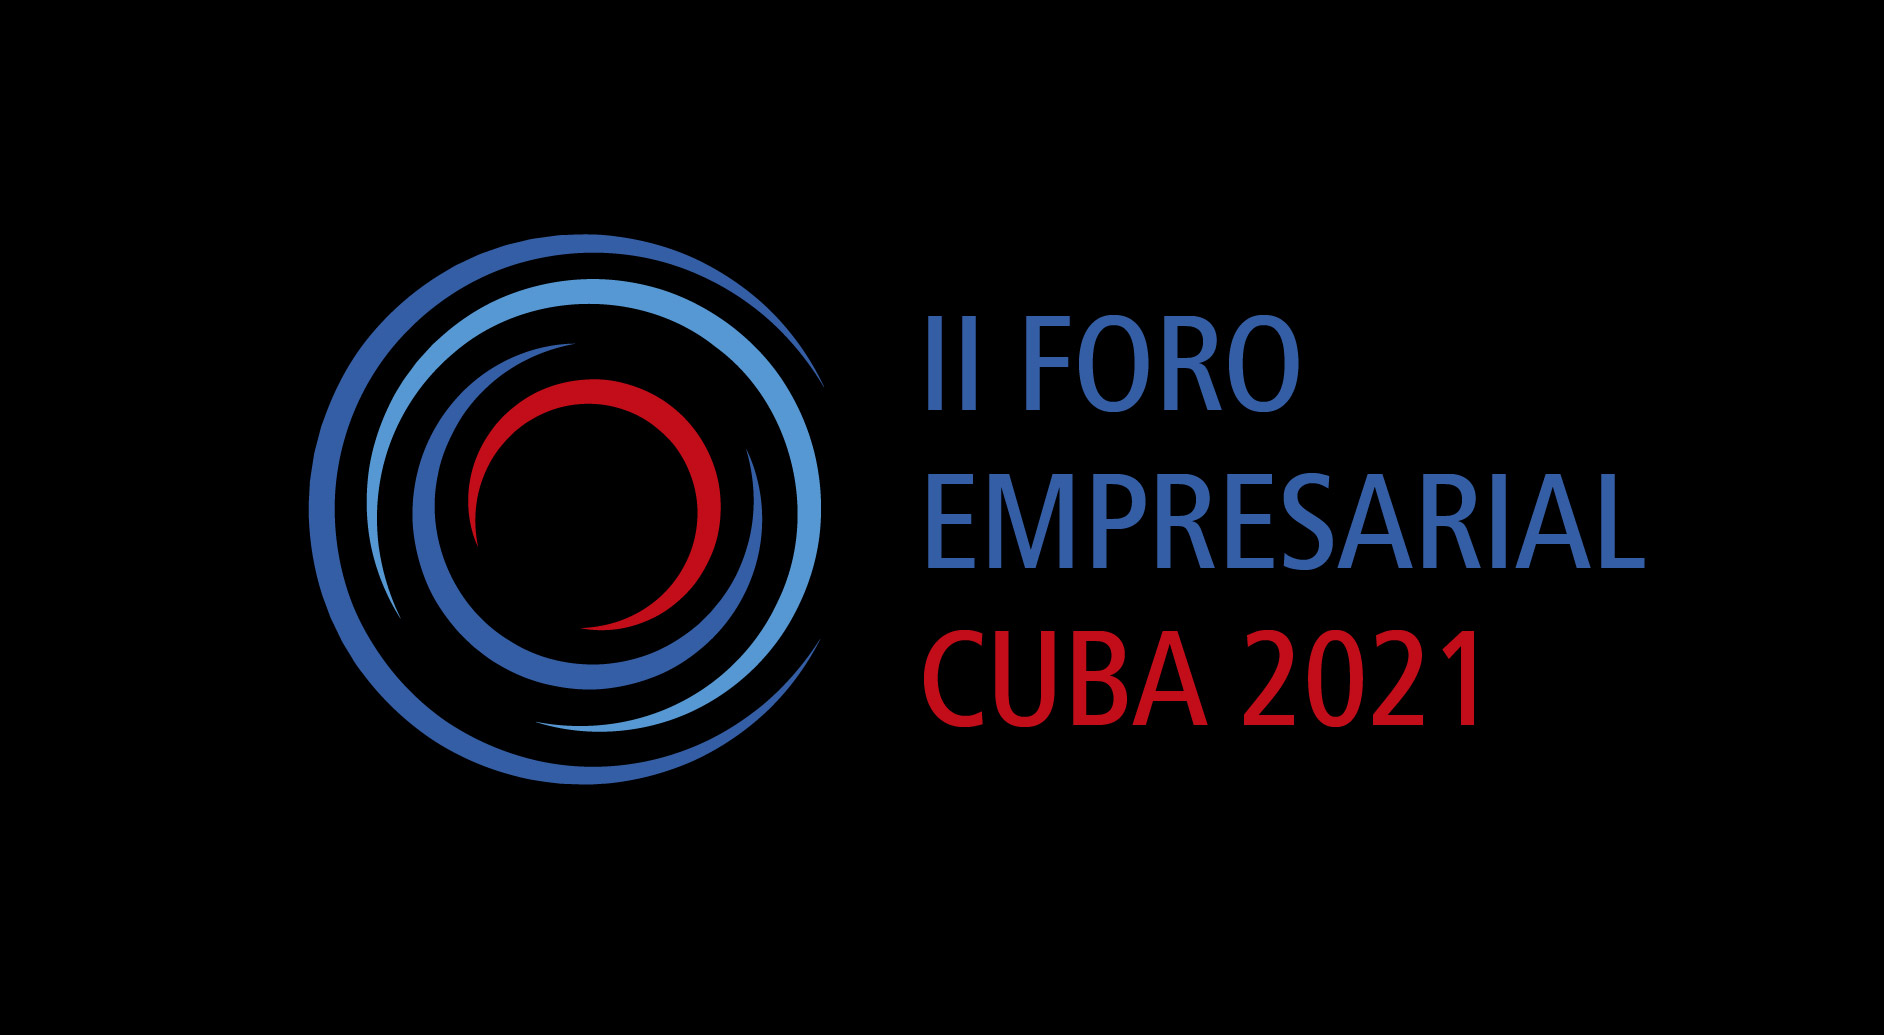 Cuba, Angola, foro, empresarial